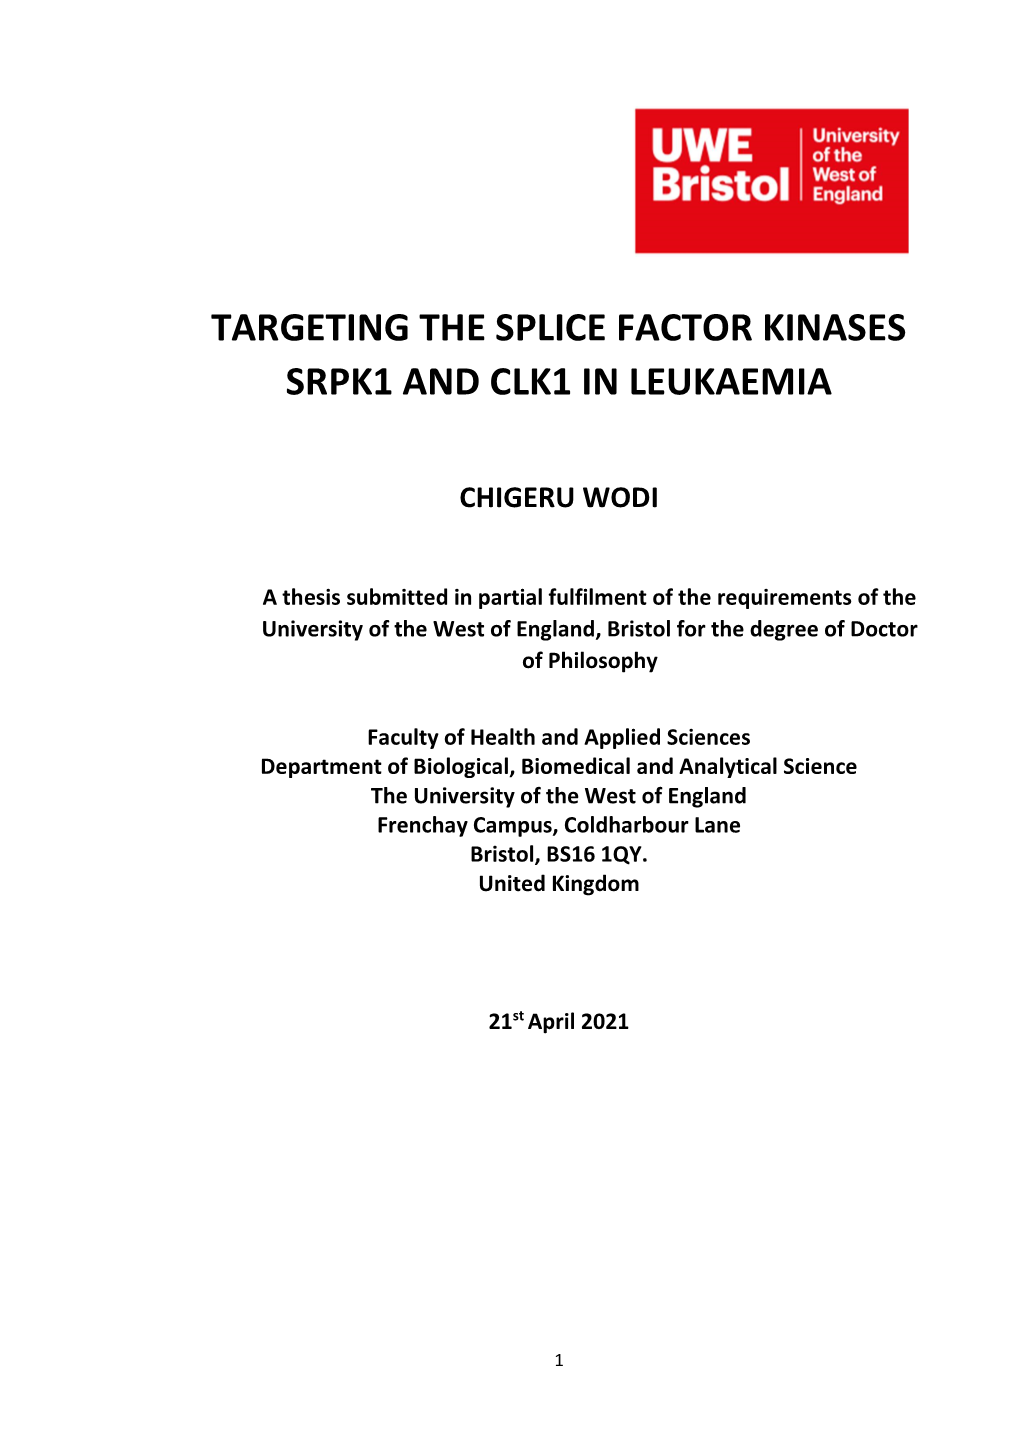 Targeting the Splice Factor Kinases Srpk1 and Clk1 in Leukaemia